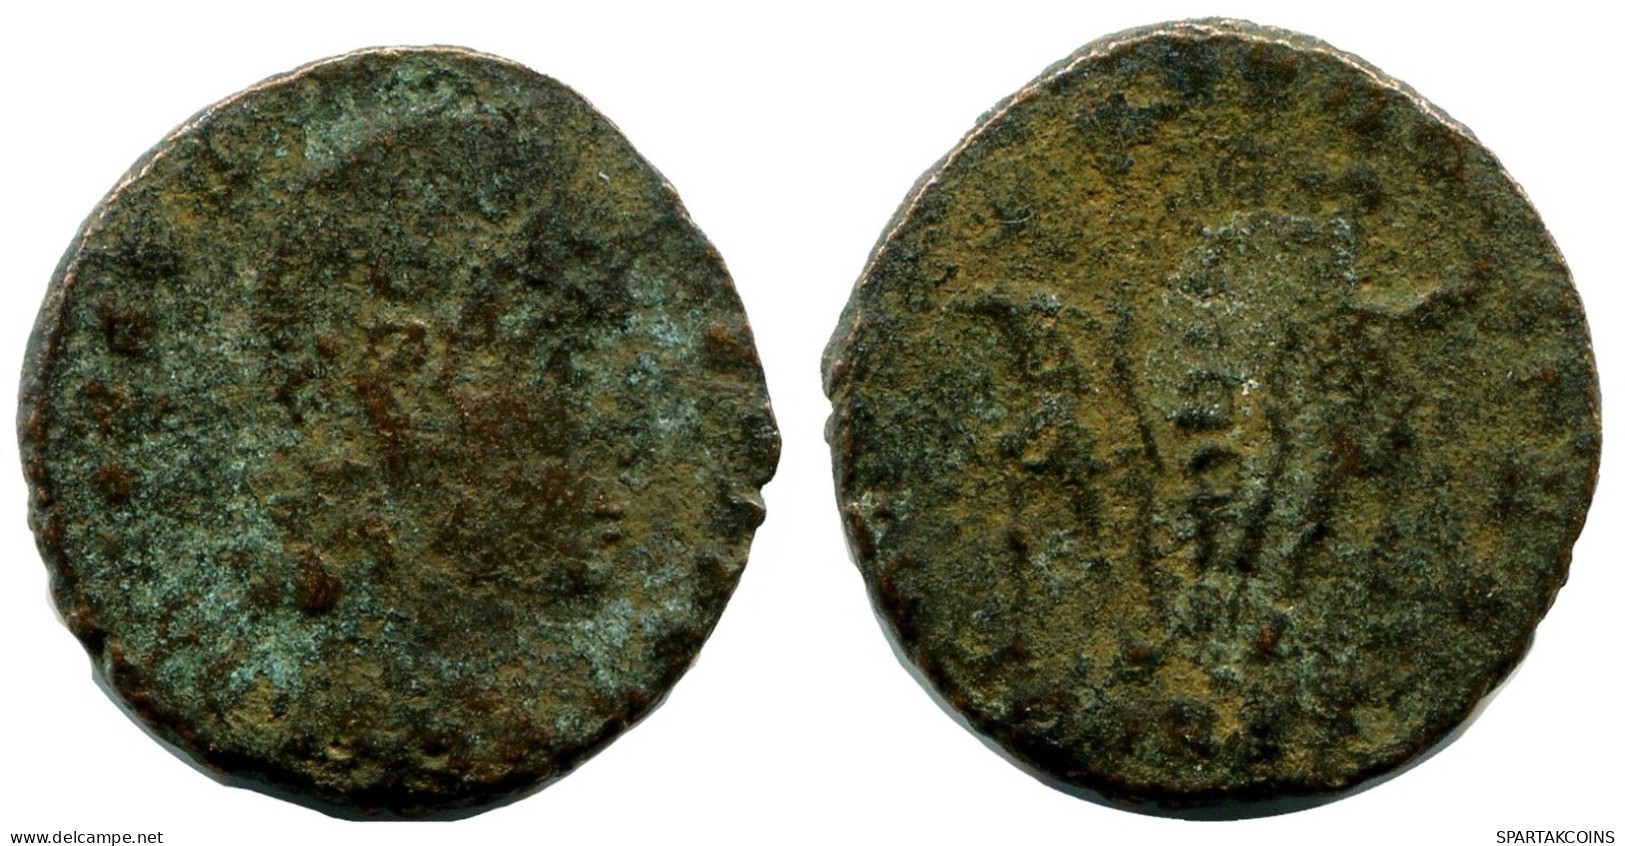 ROMAN Moneda CONSTANTINOPLE FROM THE ROYAL ONTARIO MUSEUM #ANC11061.14.E.A - El Imperio Christiano (307 / 363)